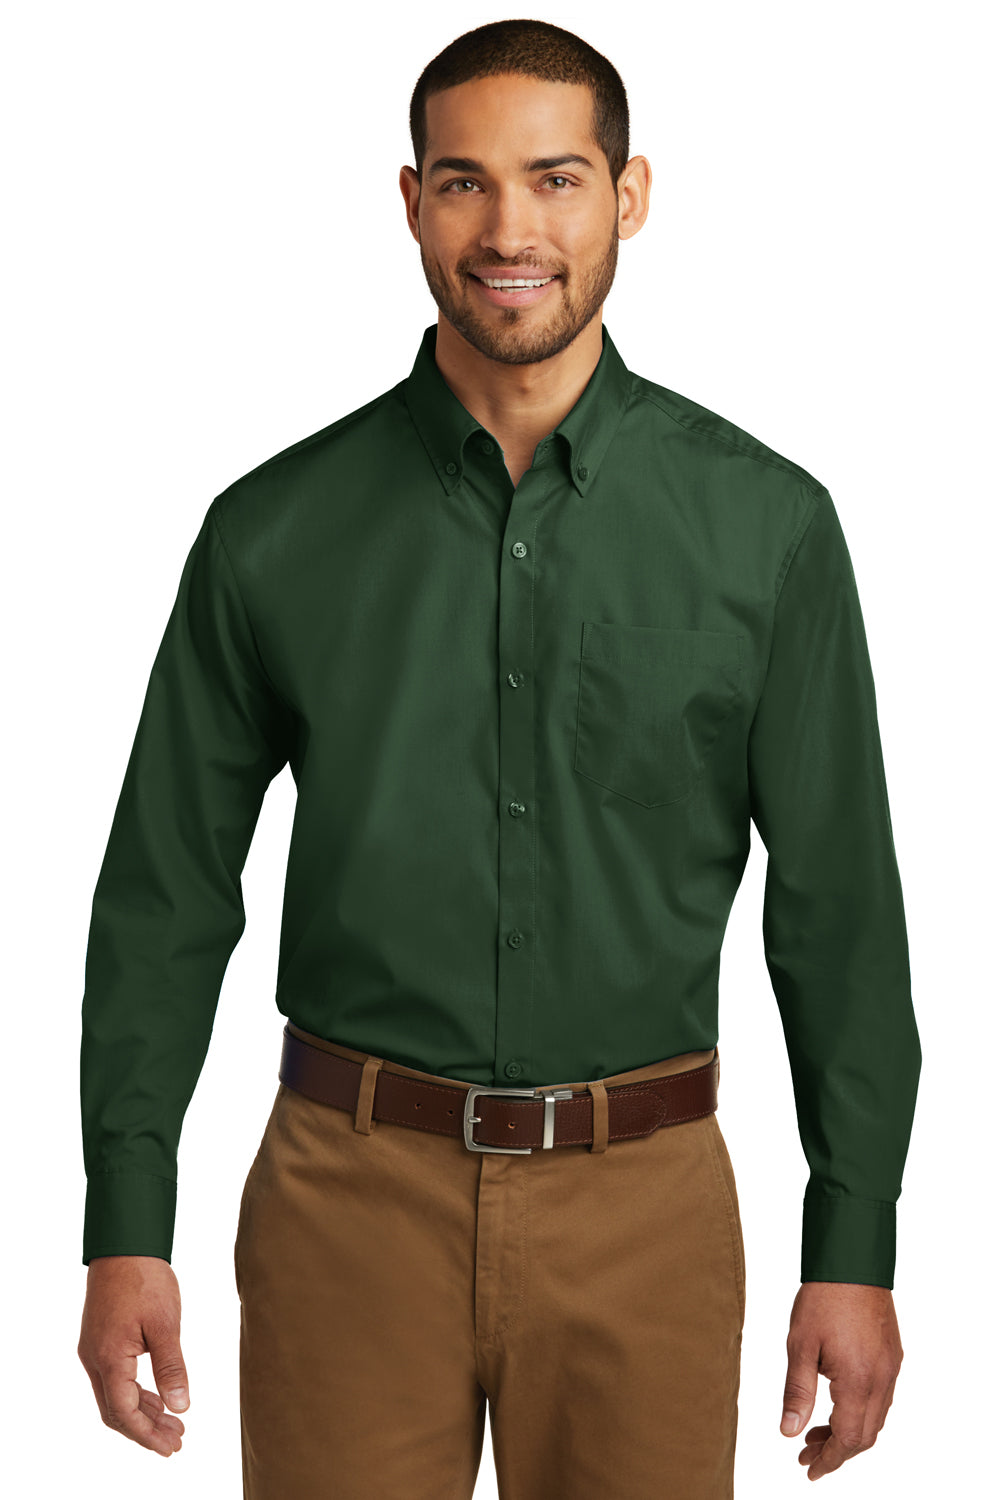 green shirt and brown pants｜TikTok Search